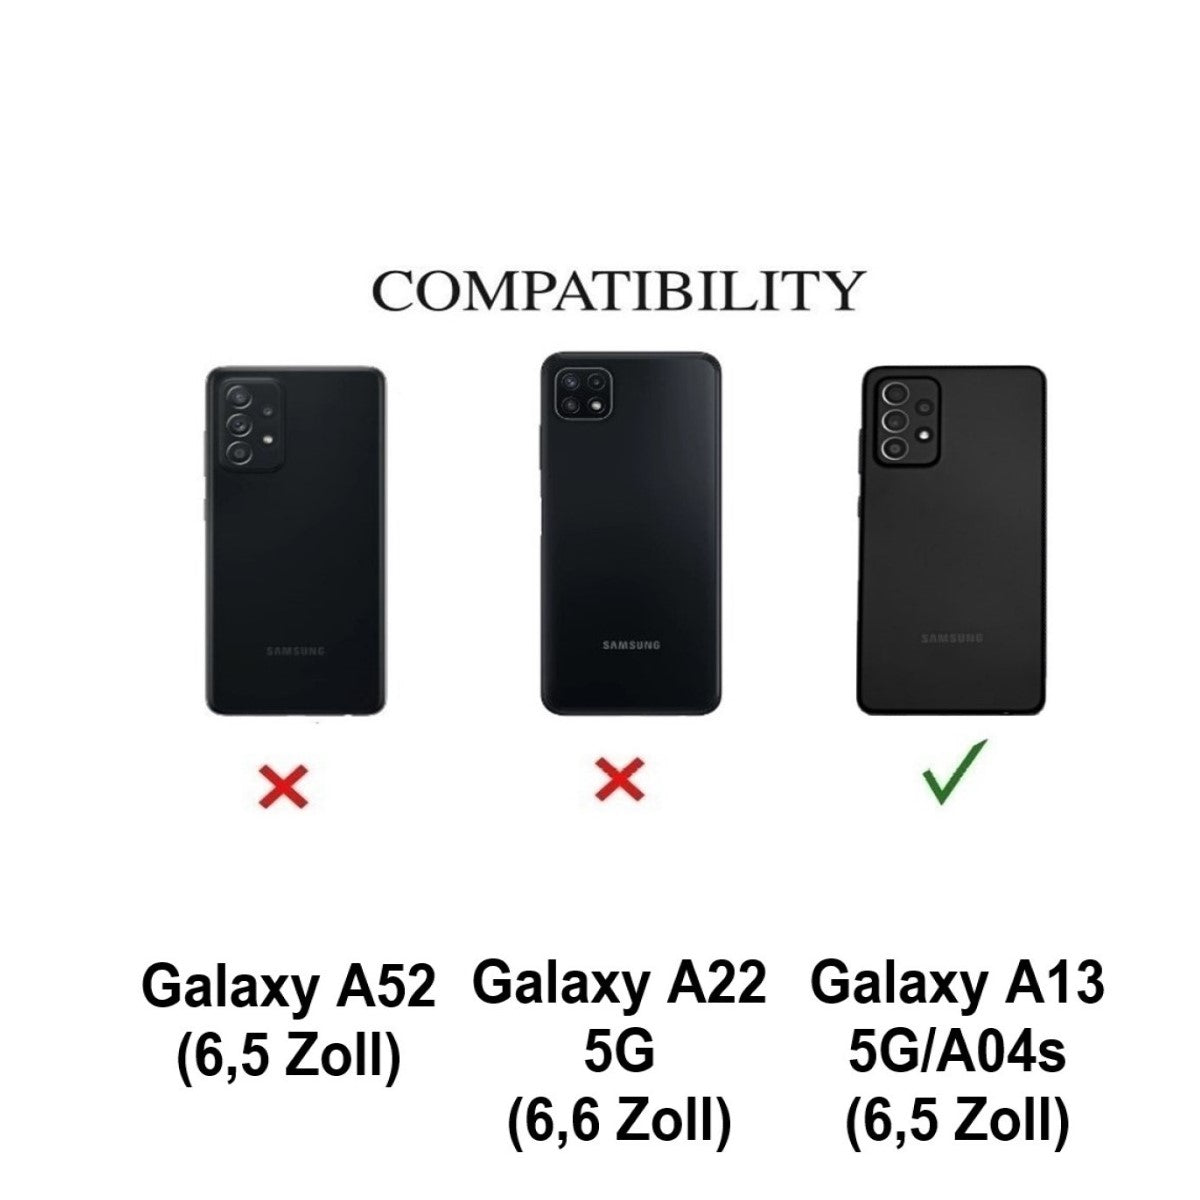 Hülle für Samsung Galaxy A13 5G/A04s Handyhülle Flip Case Cover Tasche Motiv Bär